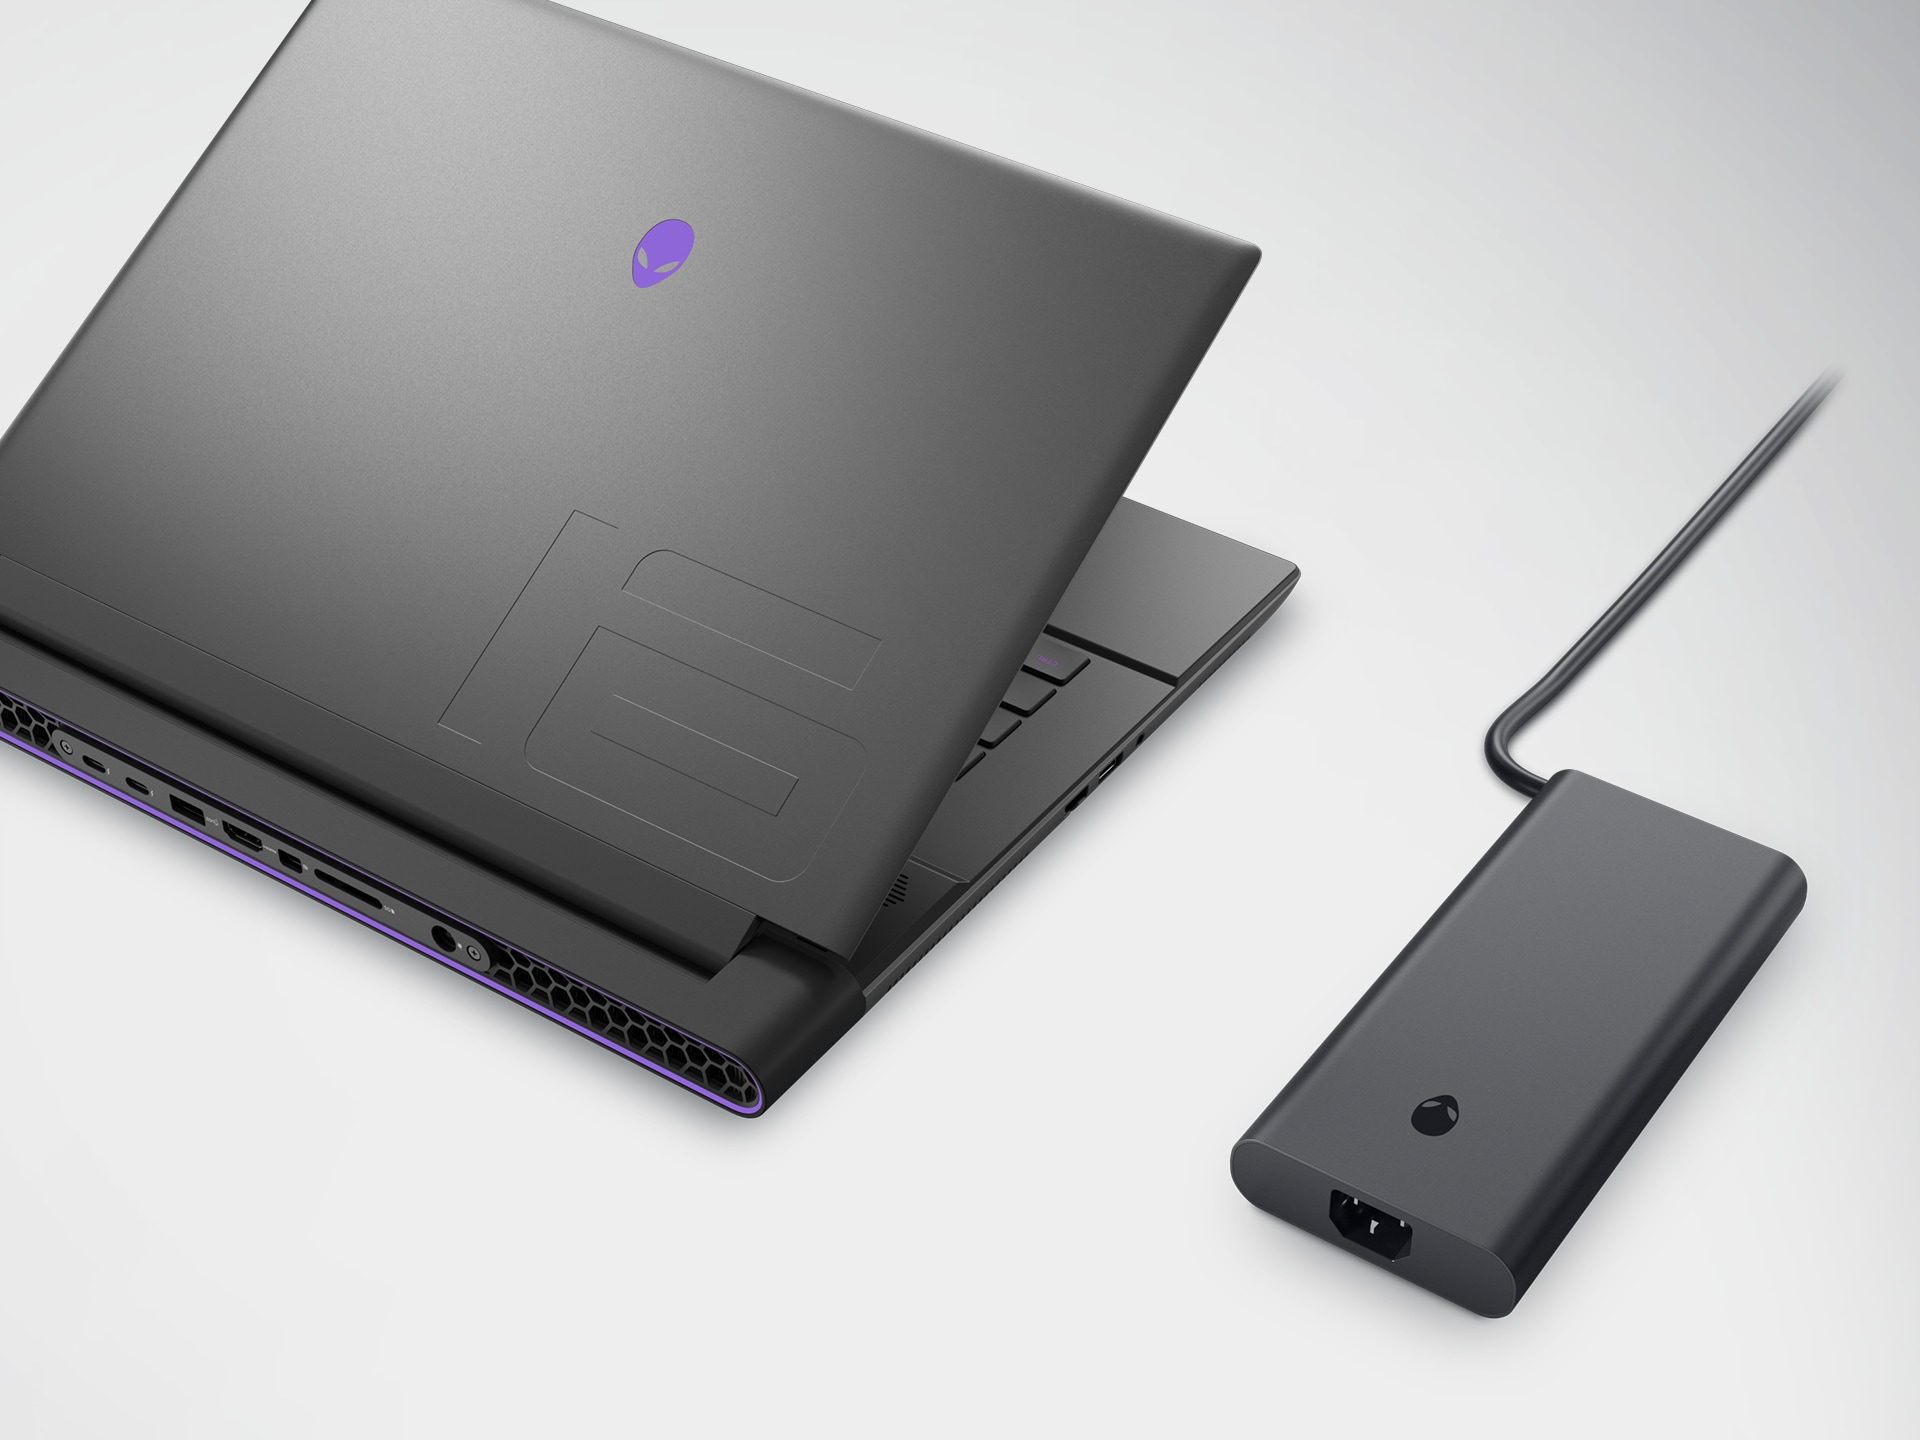 Alienware AW15R3-0012SLV Laptop (6th Generation i5, 8GB RAM, 1TB HDD)  NVIDIA GeForce GTX1060